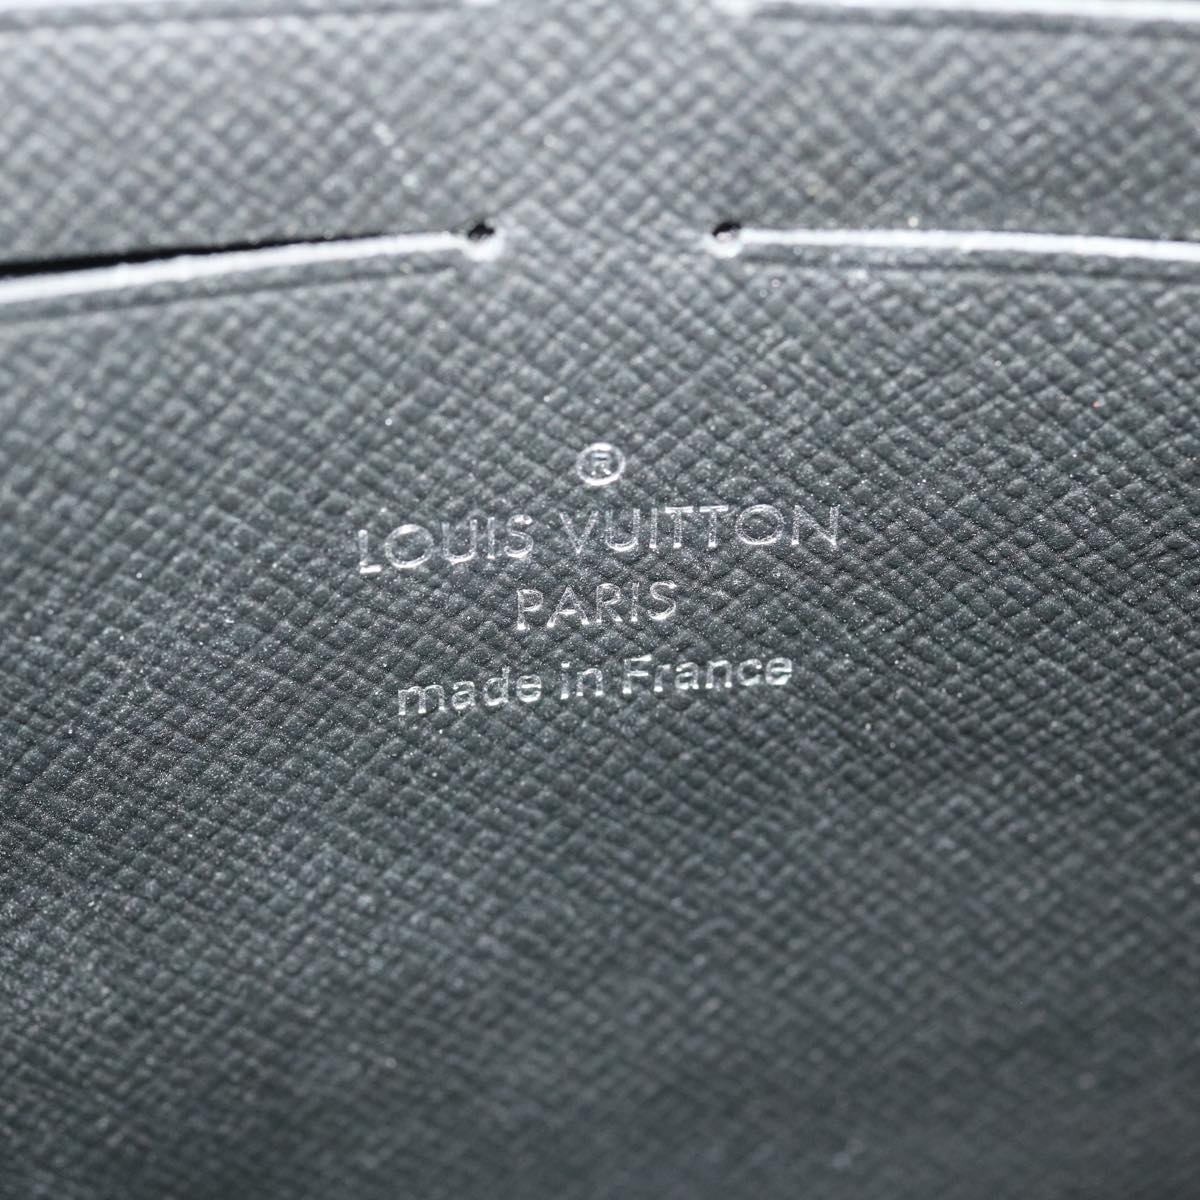 Louis Vuitton Pochette Voyage Galaxy